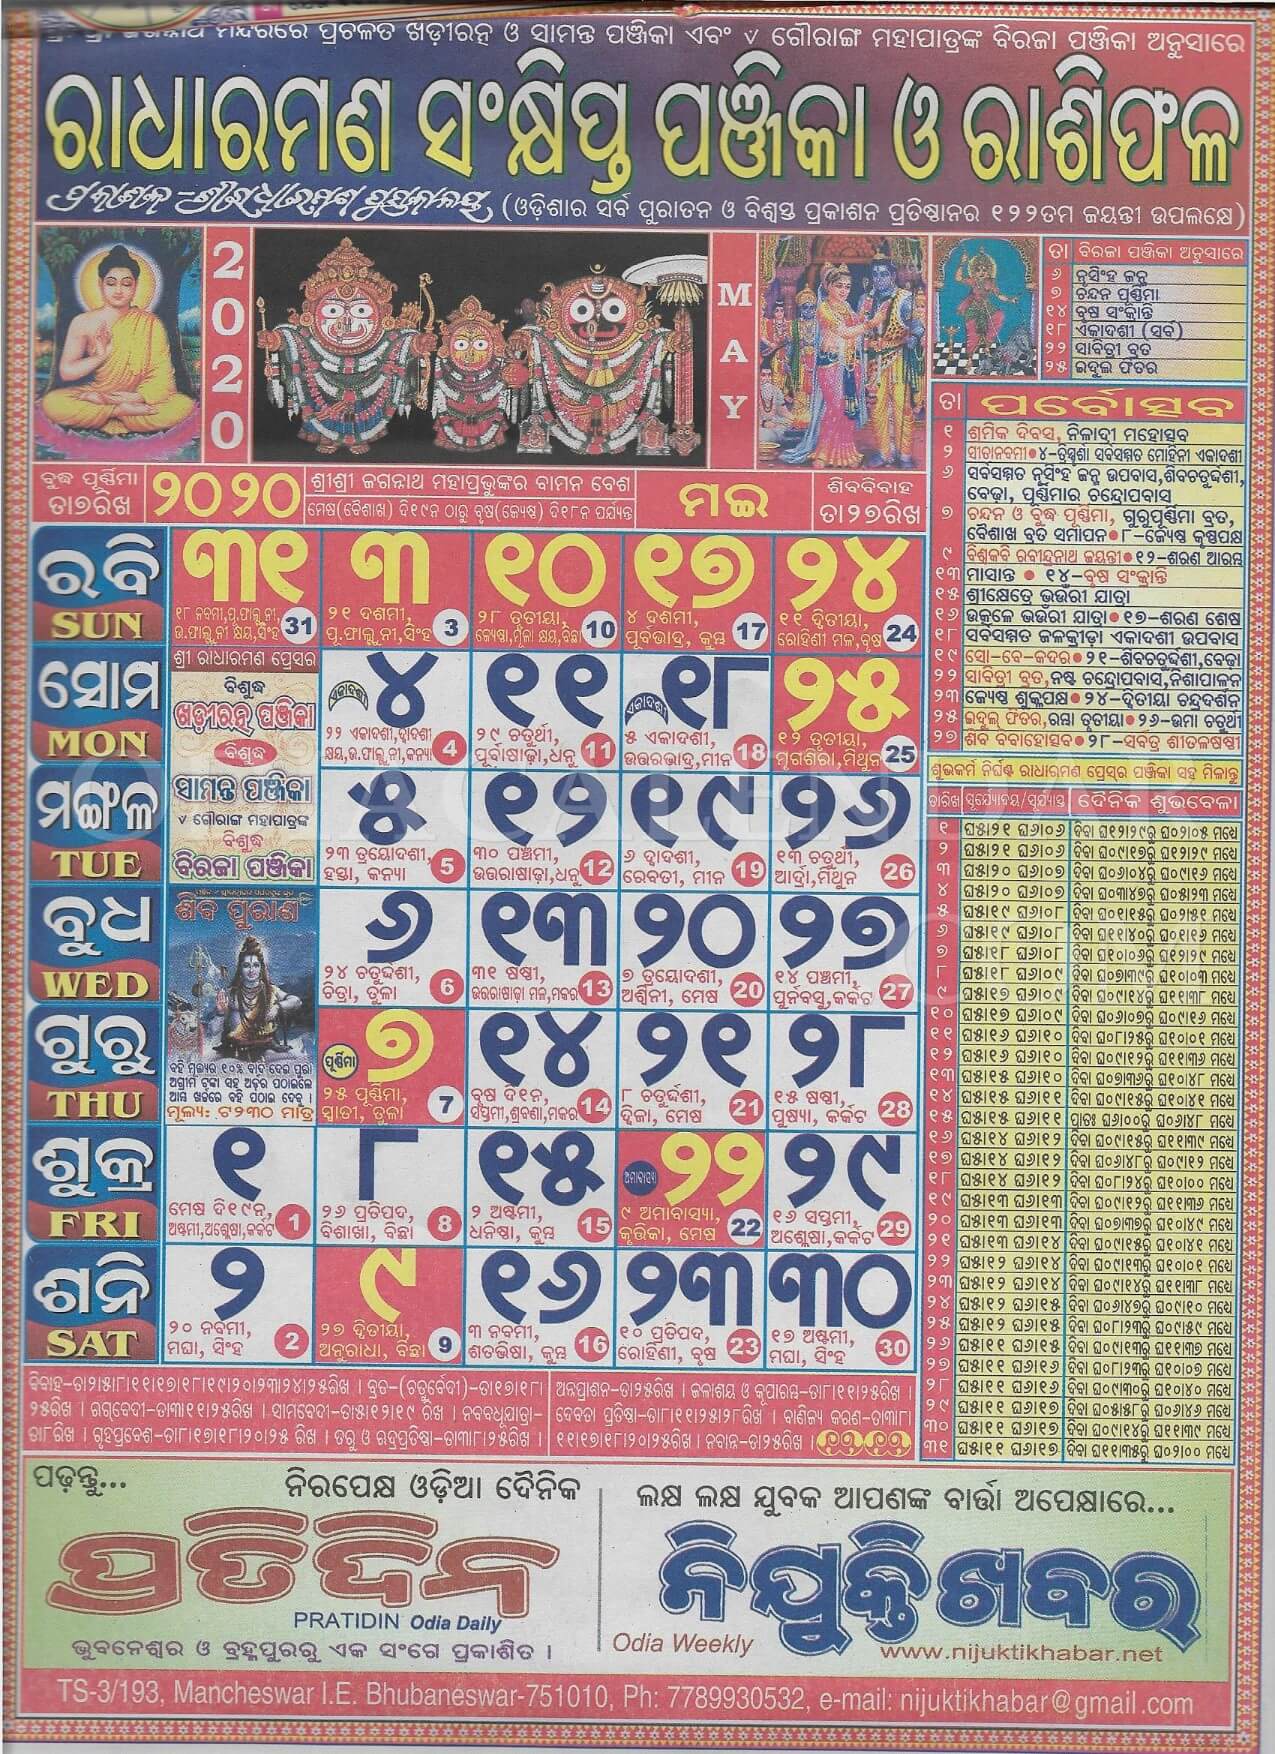 Radharaman Calendar 2020 May